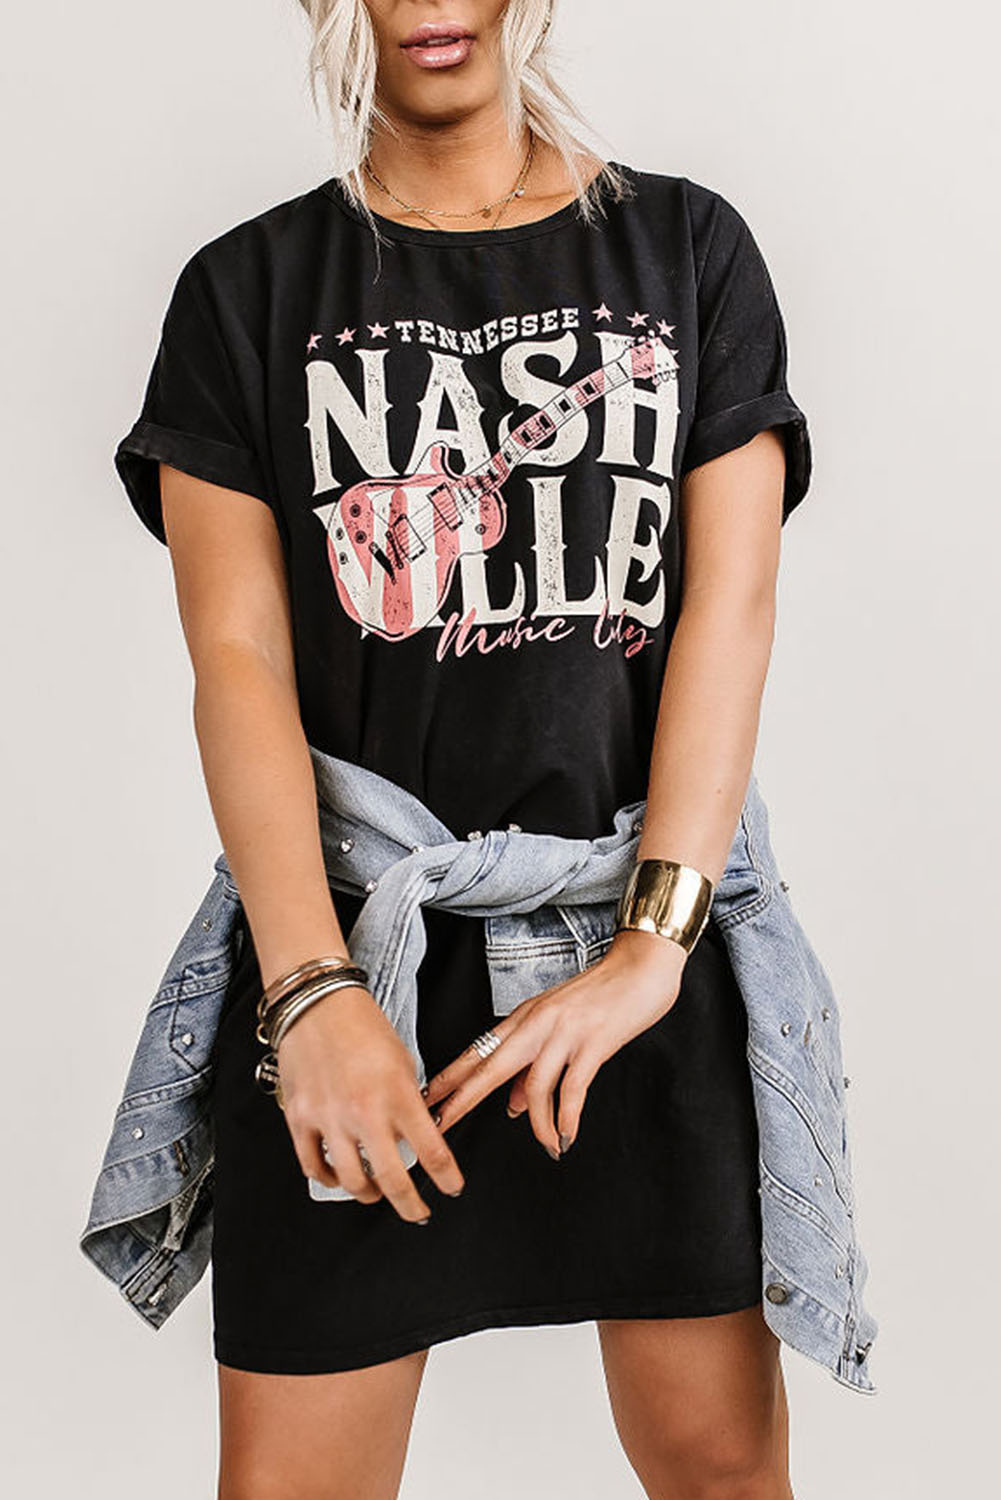 Shewin Wholesale Customized Black Nashville MUSIC Festival Trending T-Shirt Dress